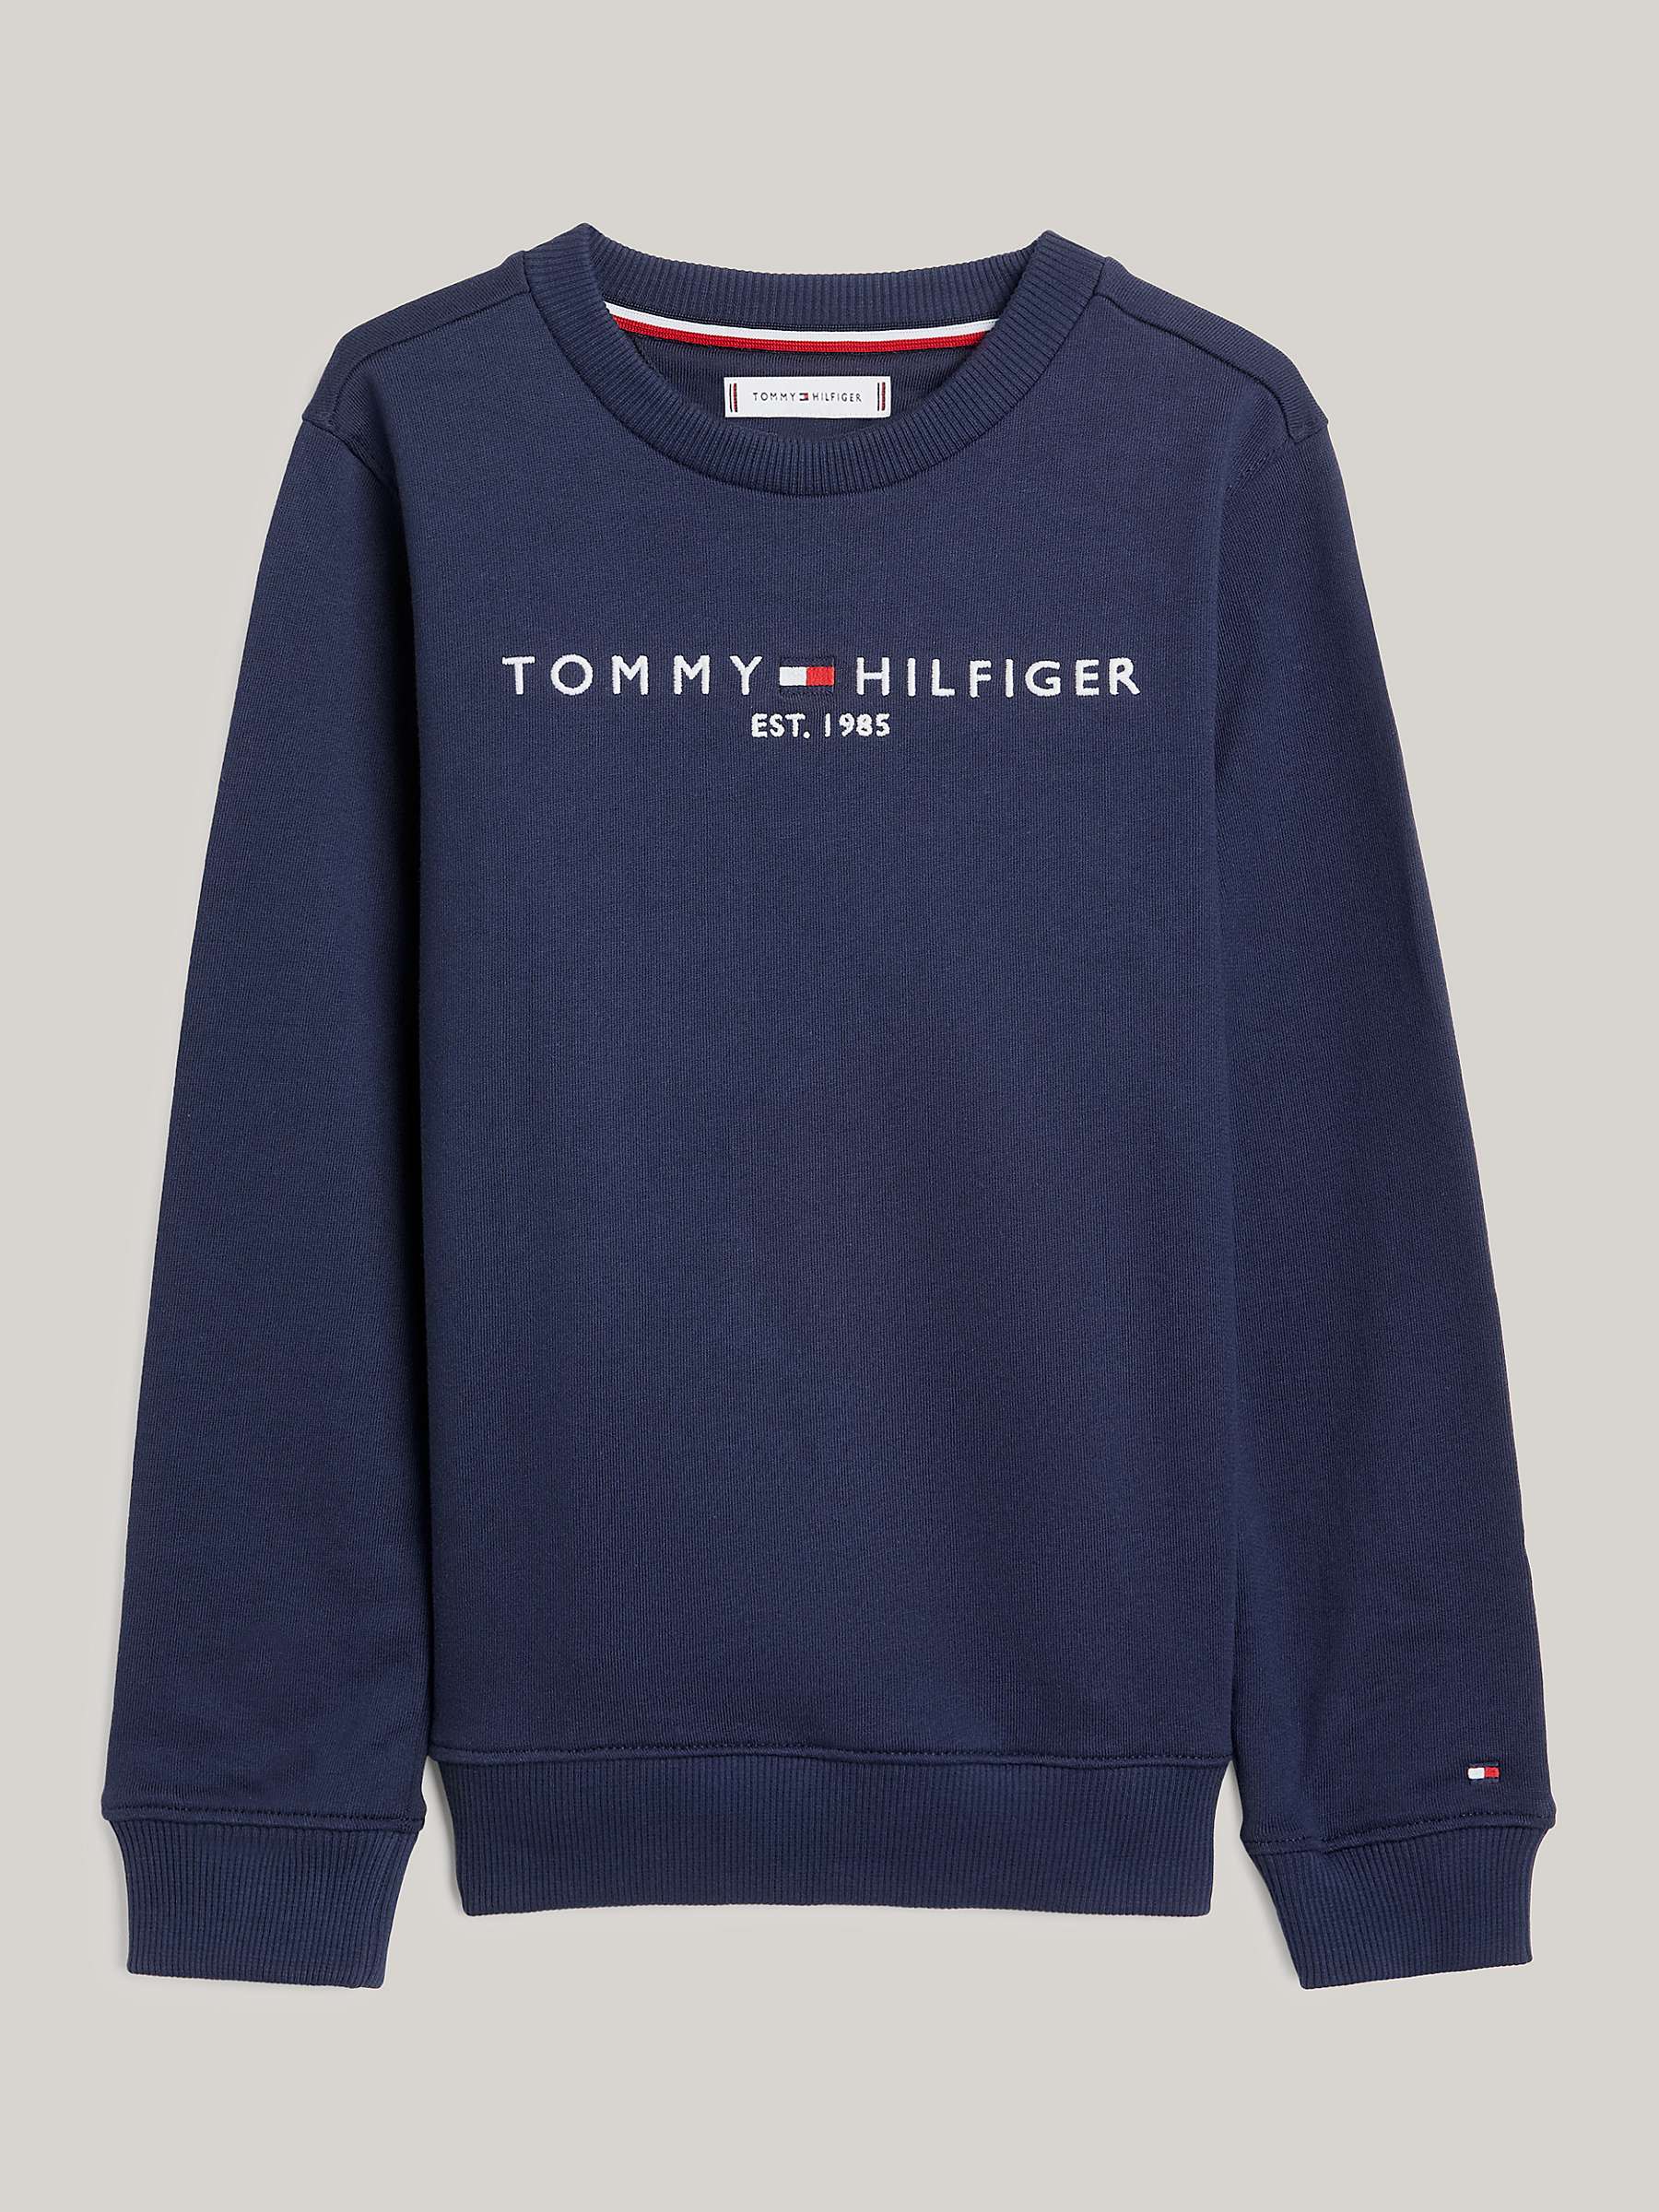 Tommy Hilfiger Kids' Essential Organic Cotton Logo Sweatshirt, Twilight  Navy at John Lewis & Partners